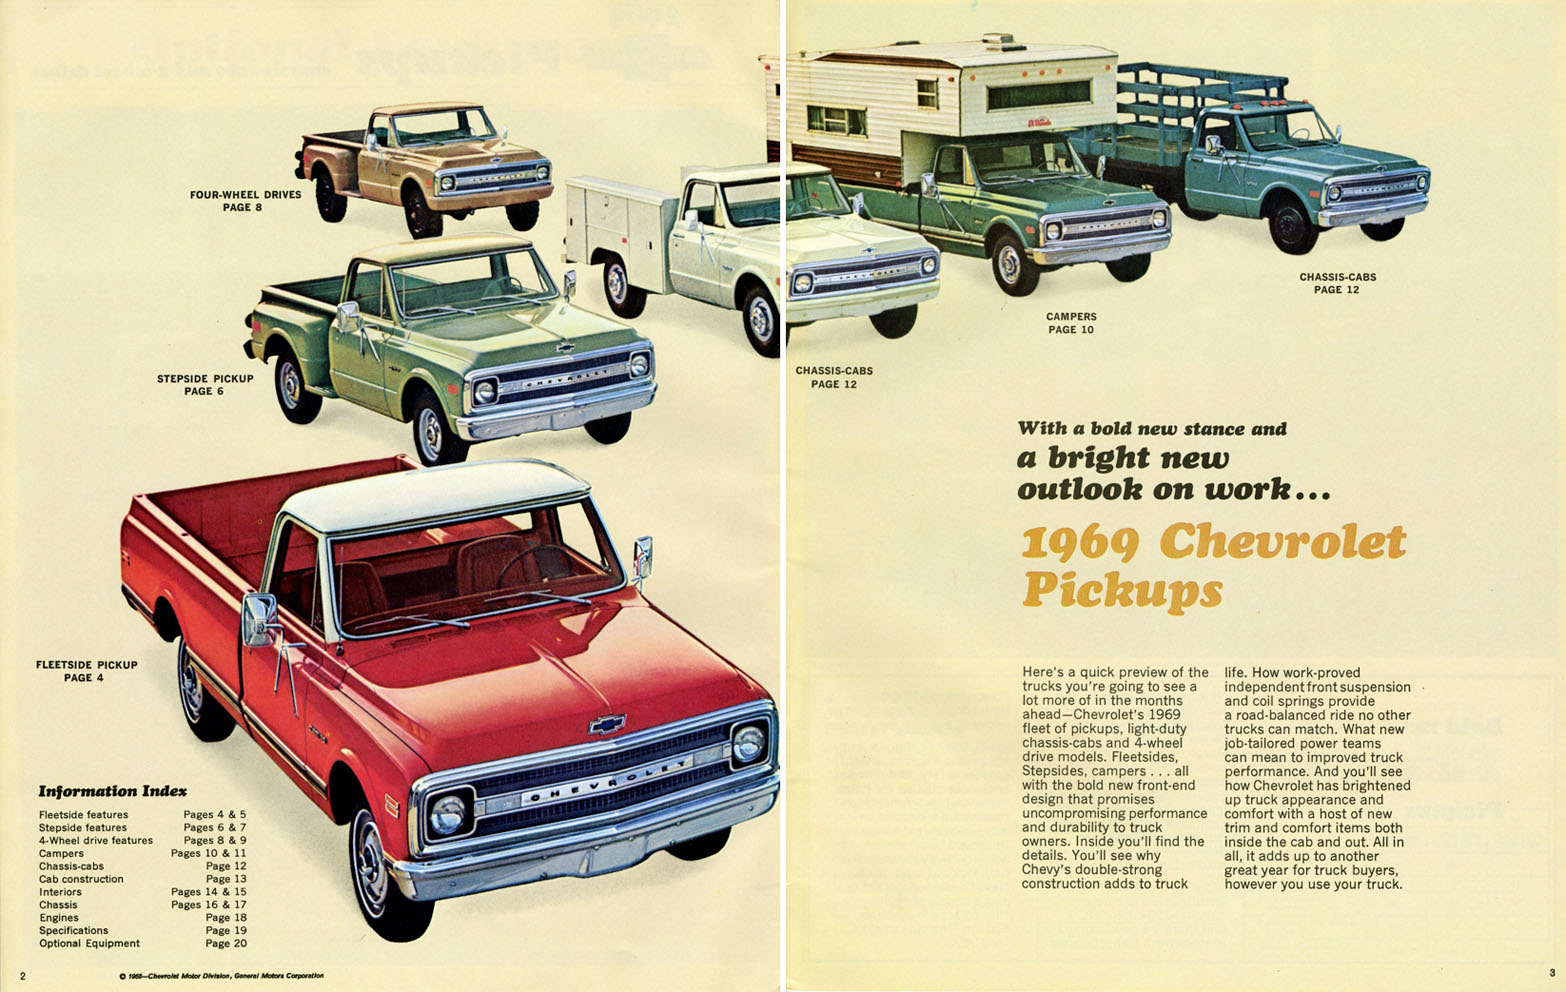 n_1969 Chevrolet Pickups-02-03.jpg